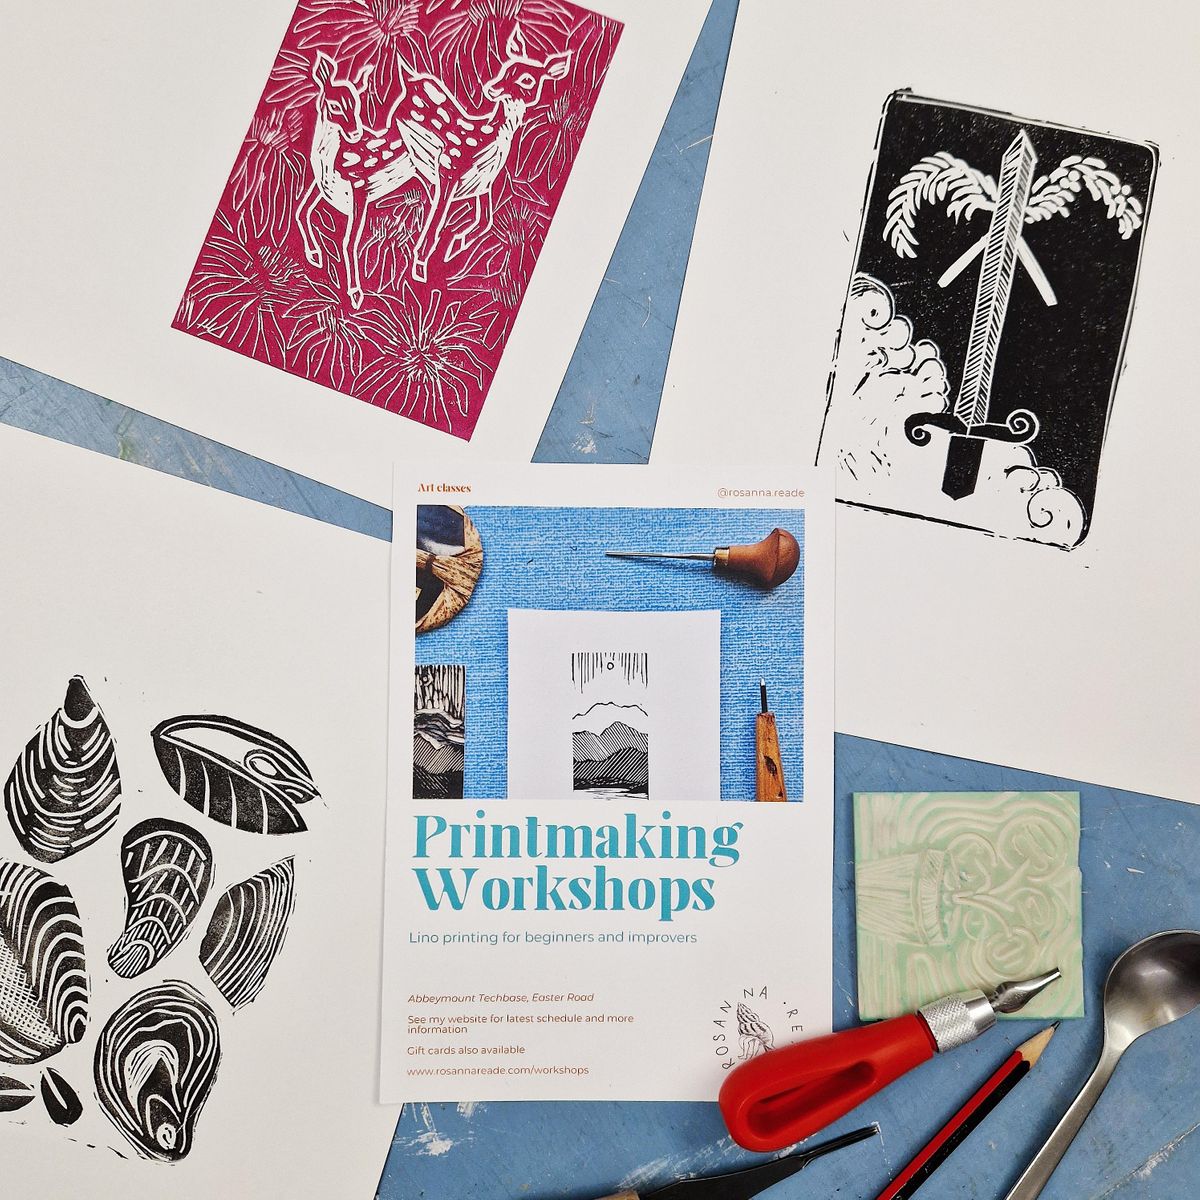 Lino printing for beginners - art workshop